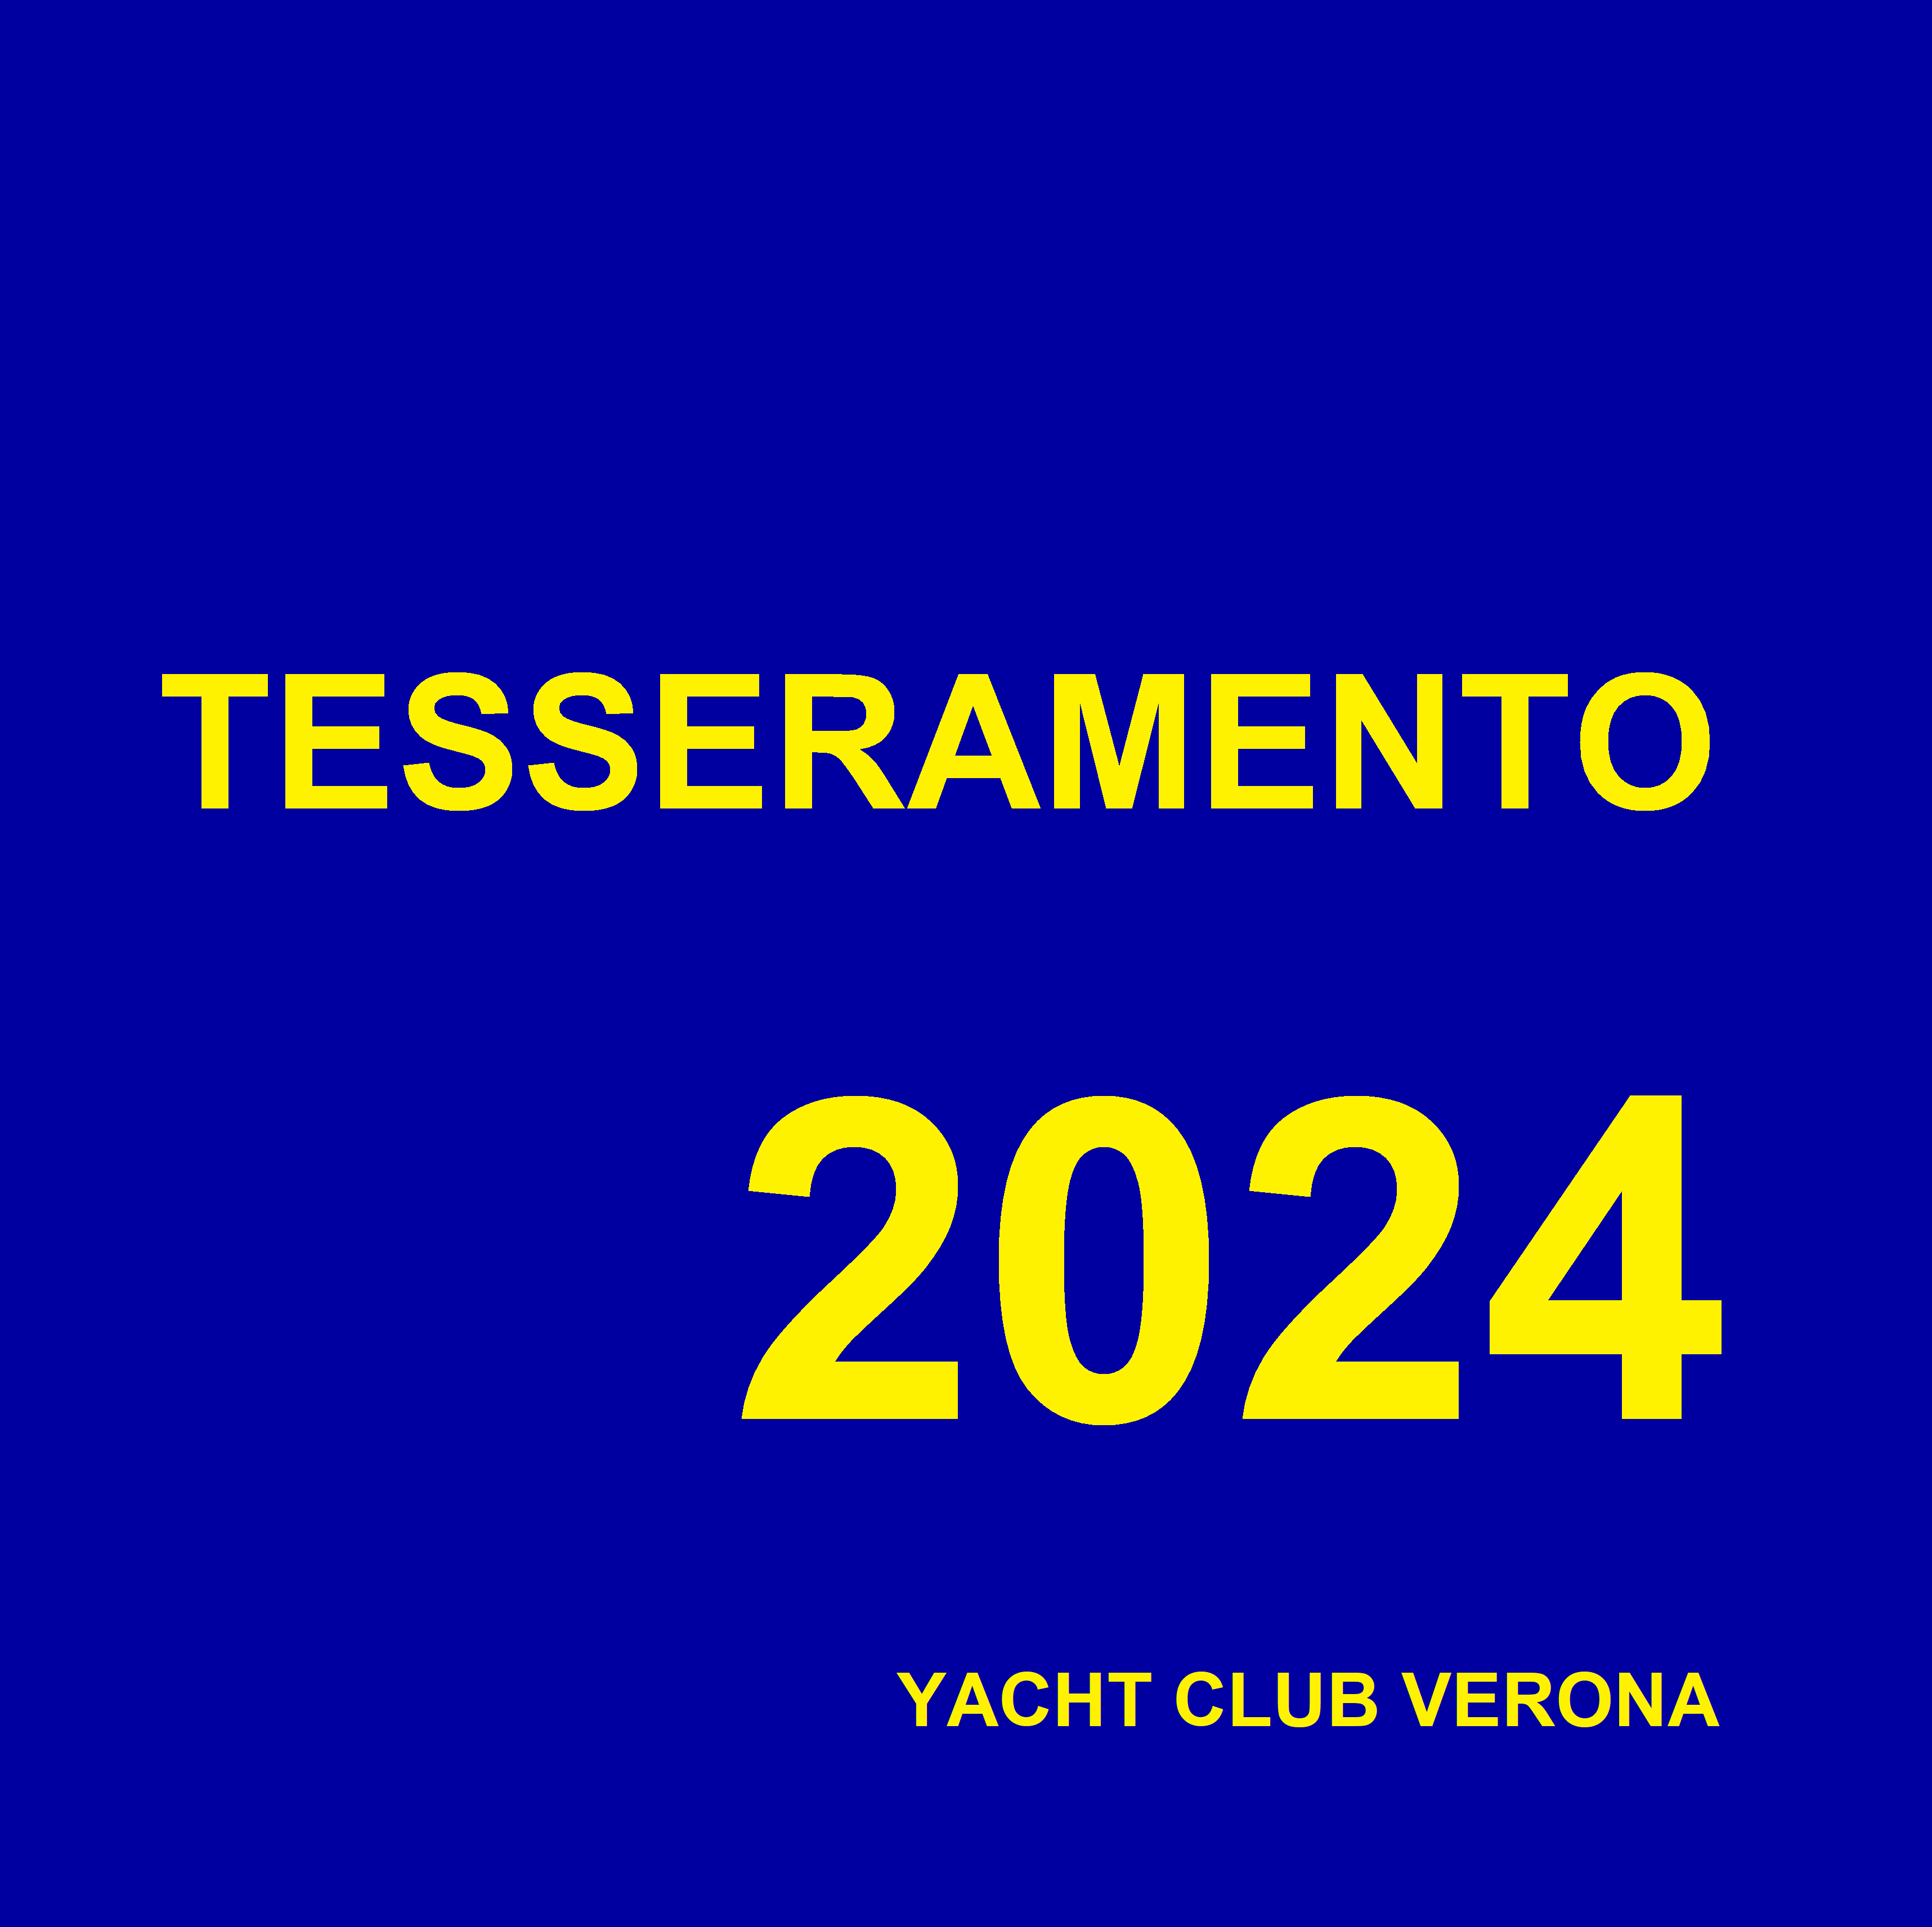 TESSERAMENTO 2022